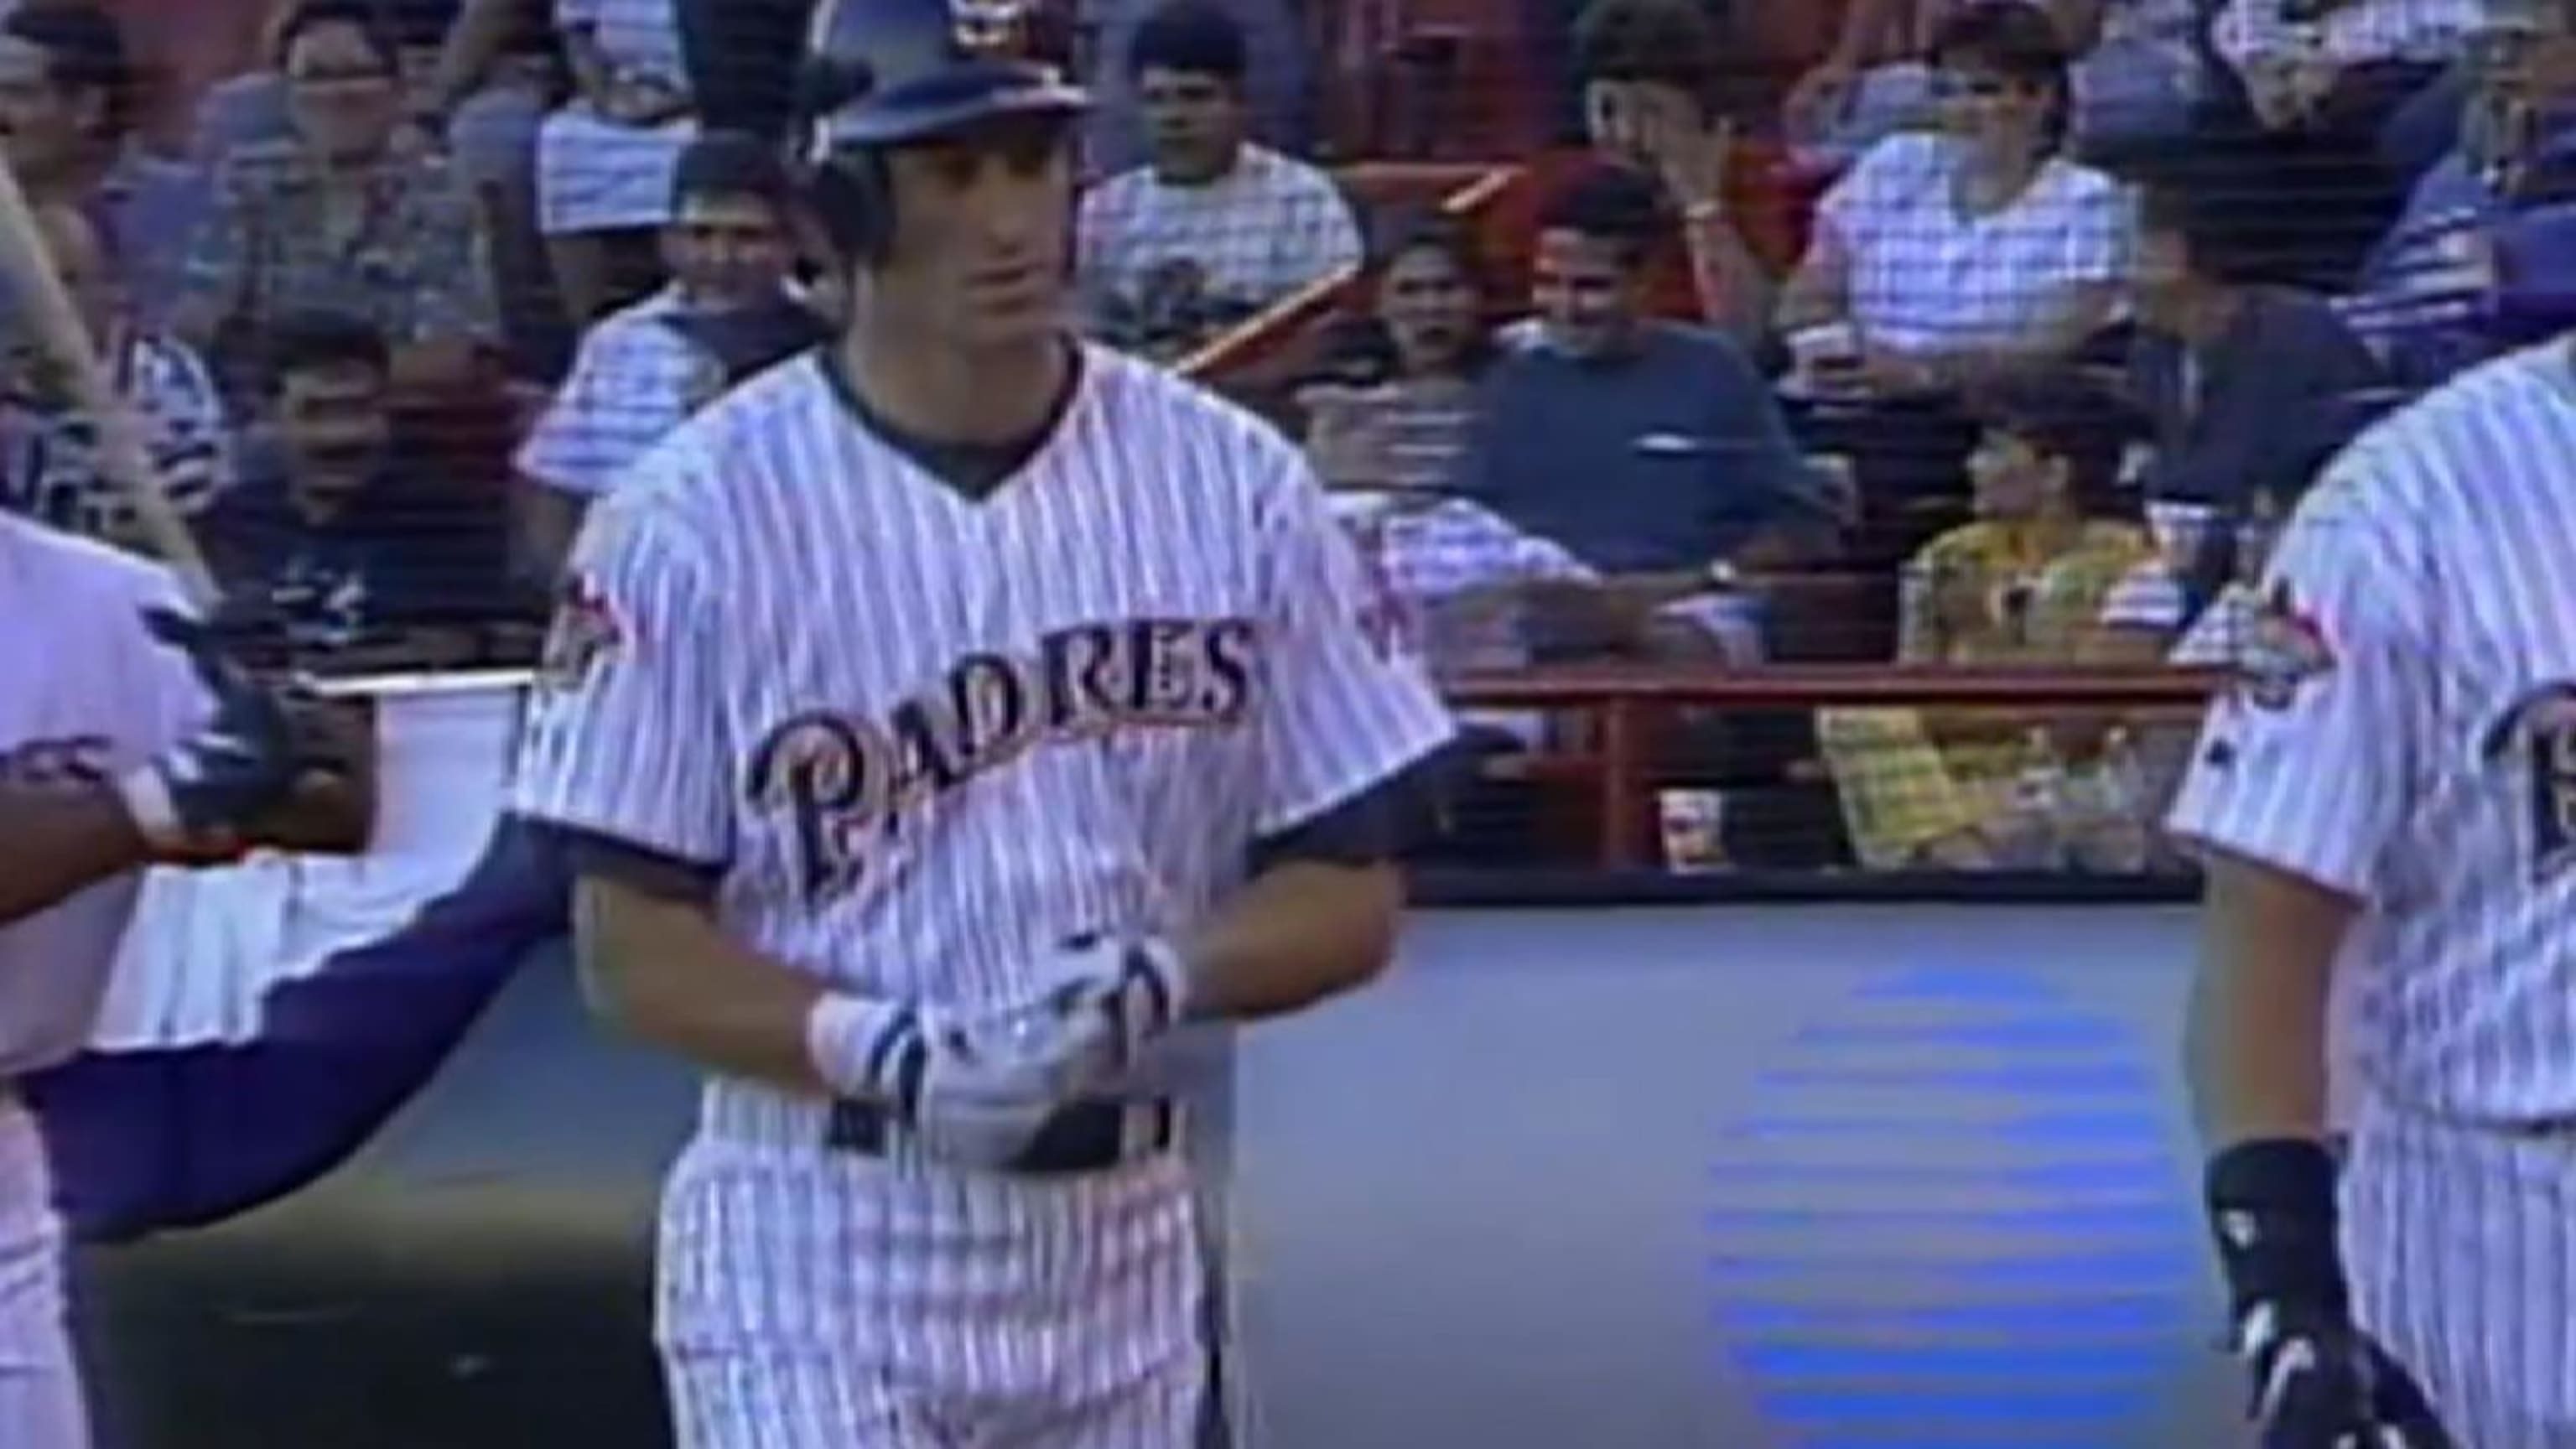 August 16, 1996: Valenzuela, Padres enjoy a baseball fiesta in